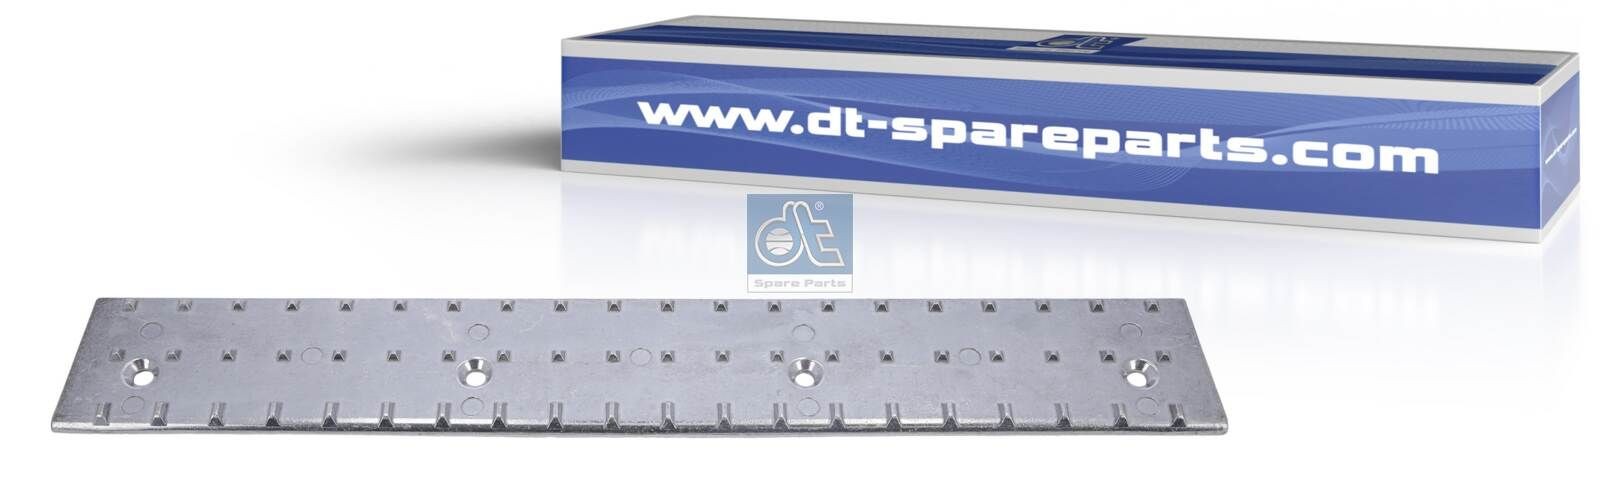 5.16094 DT Spare Parts Trittbrett DAF 65